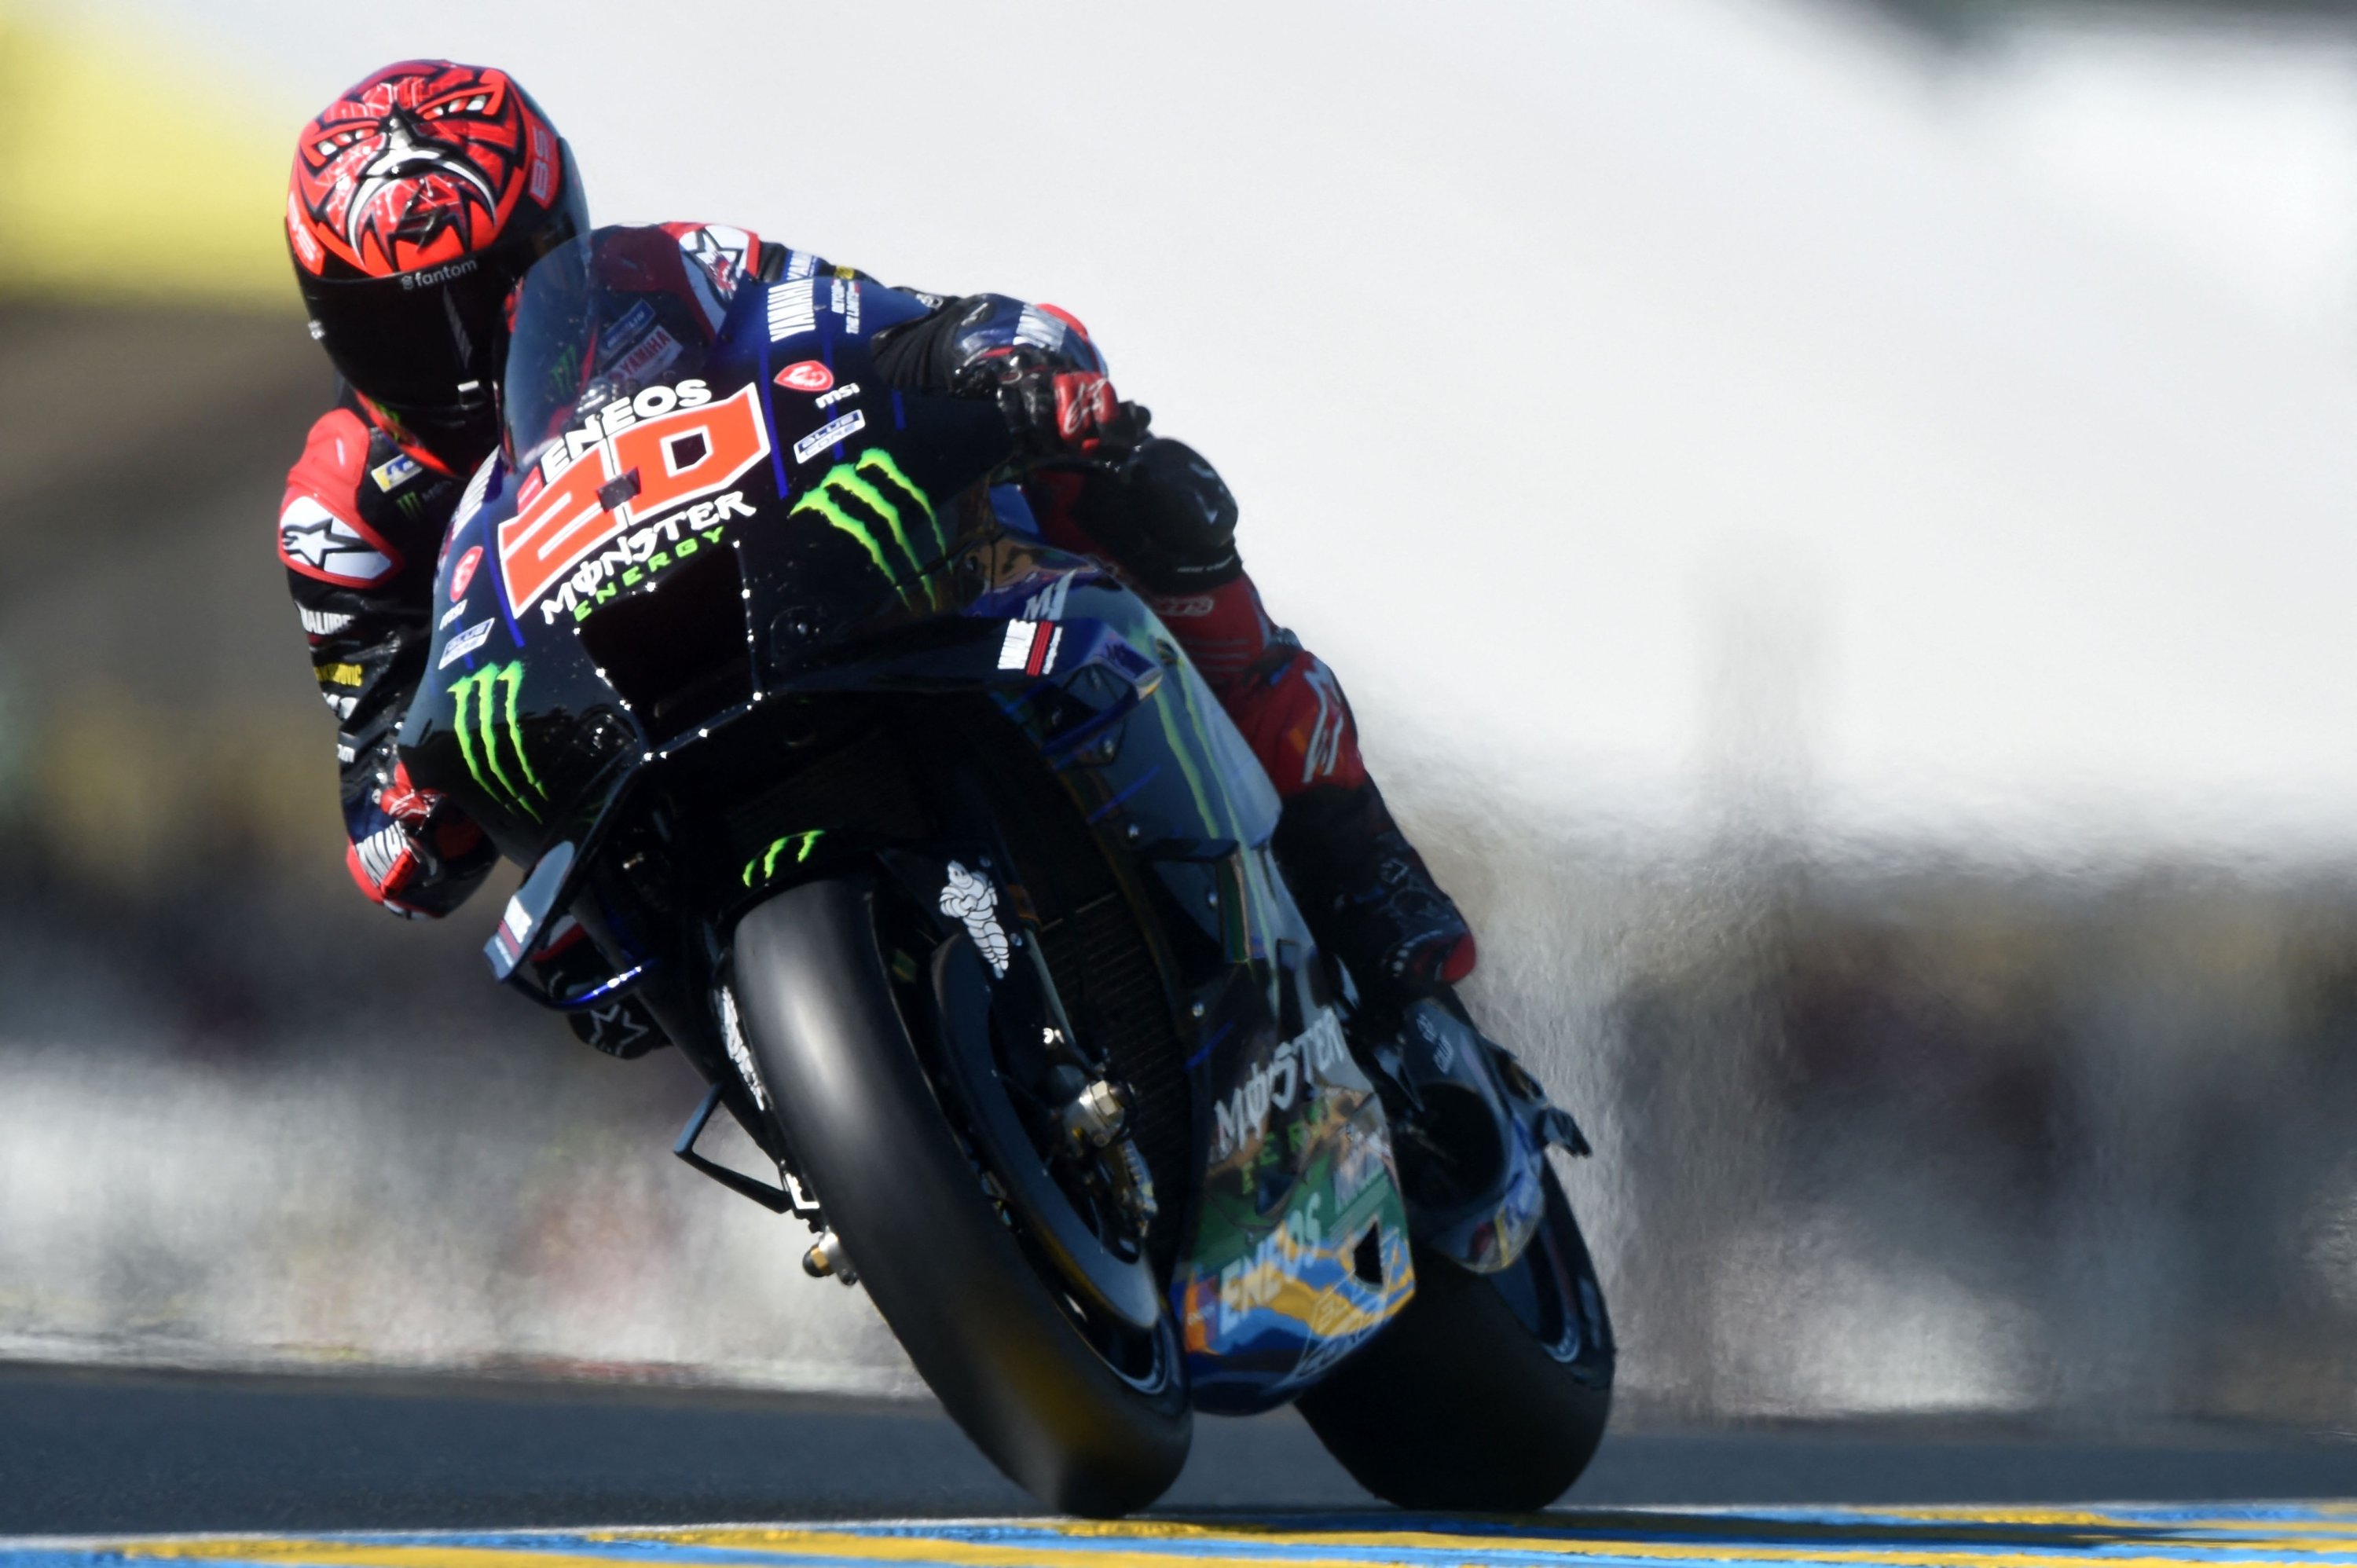 Fabio Quartararo is MotoGP's first French world champion